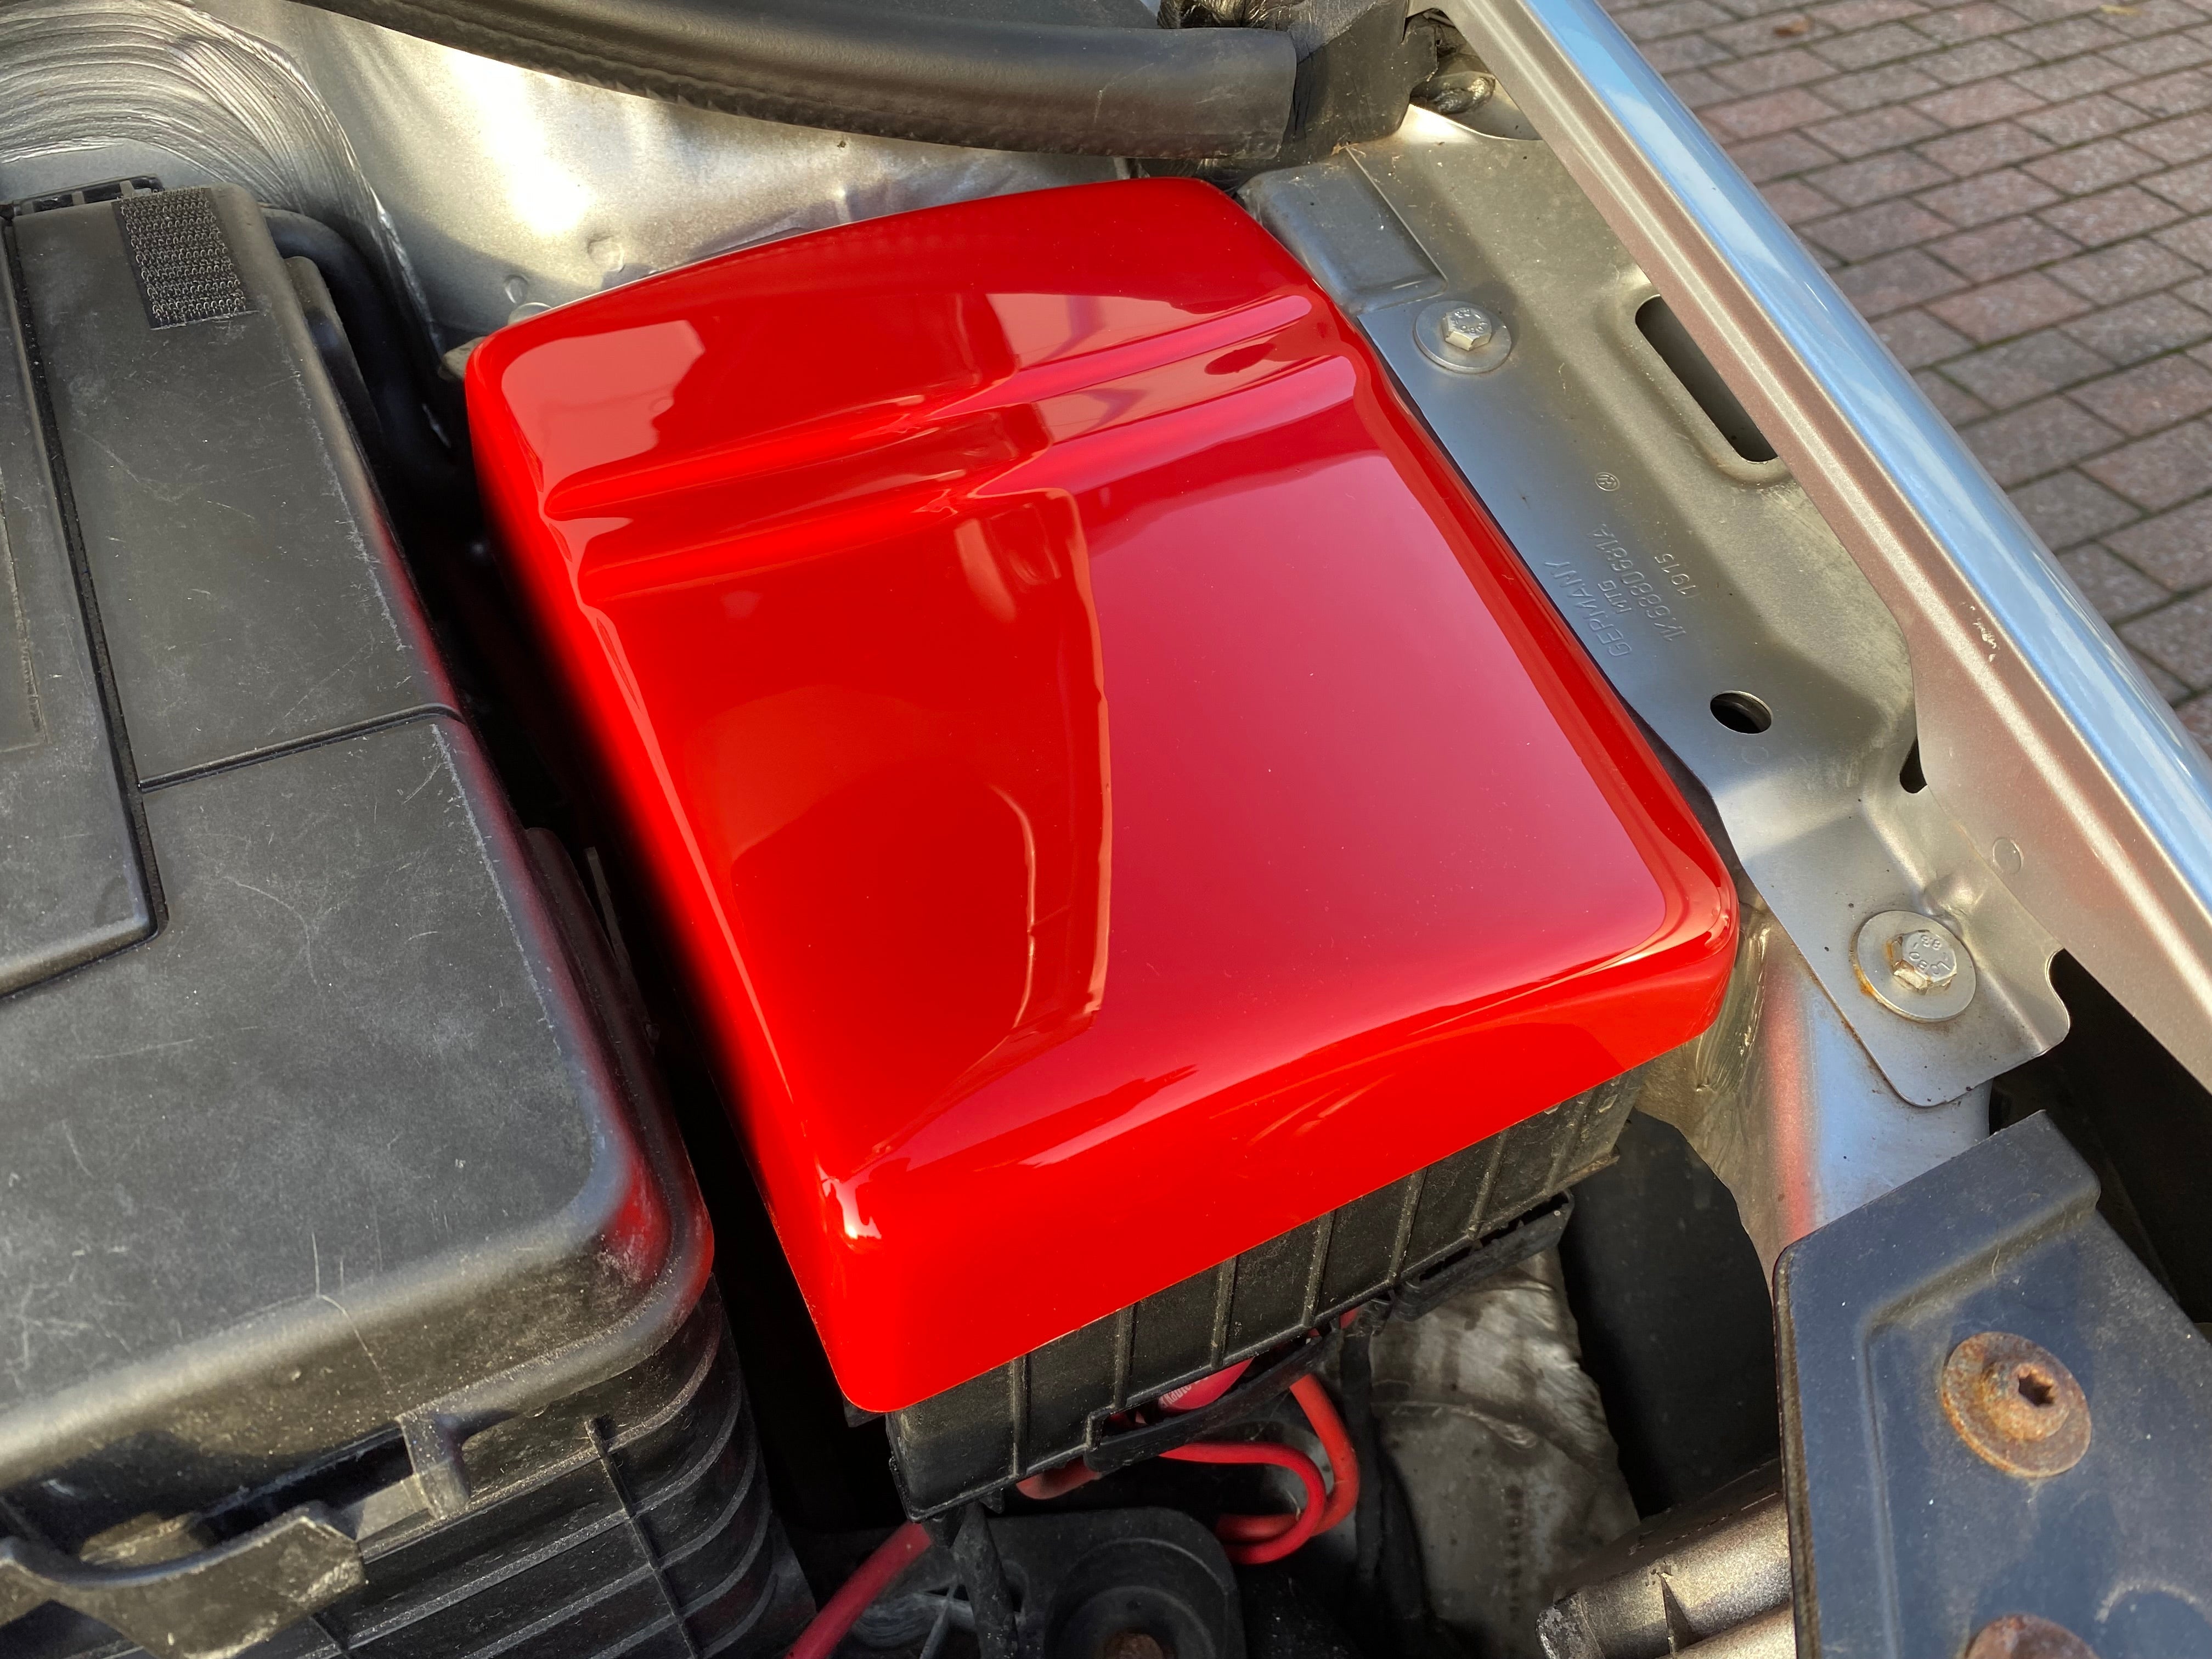 Proform Fuse Box Cover - Mk6 Volkswagen Golf (Plastic Finishes)